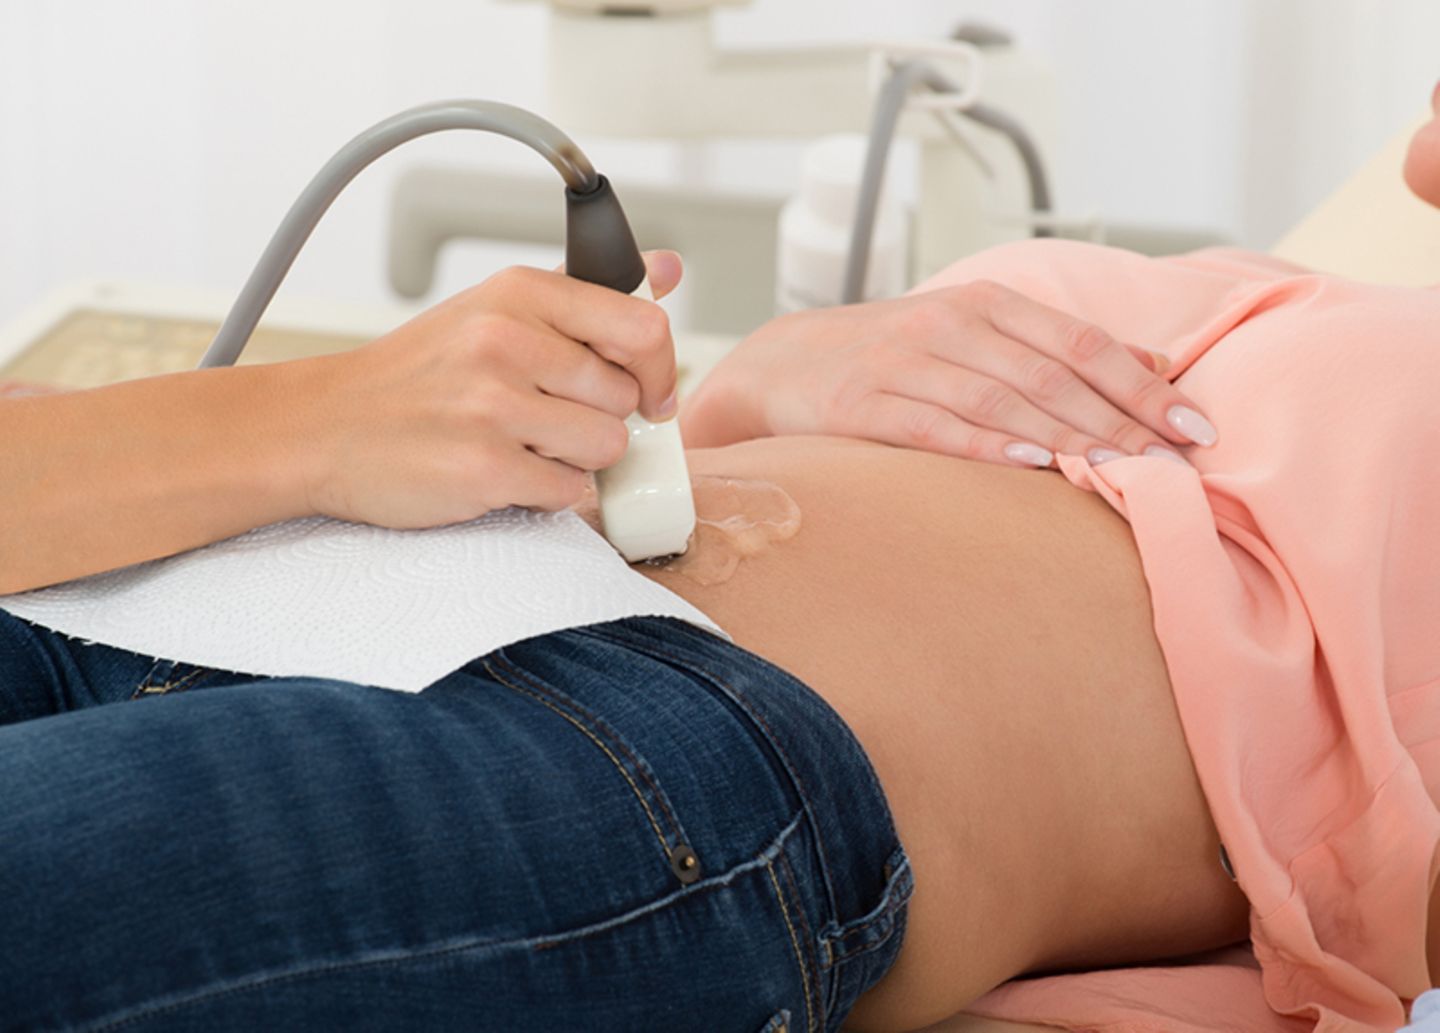 Lange schwangerschaftstest positiv ausschabung wie nach Schwangerschaftstest, wie